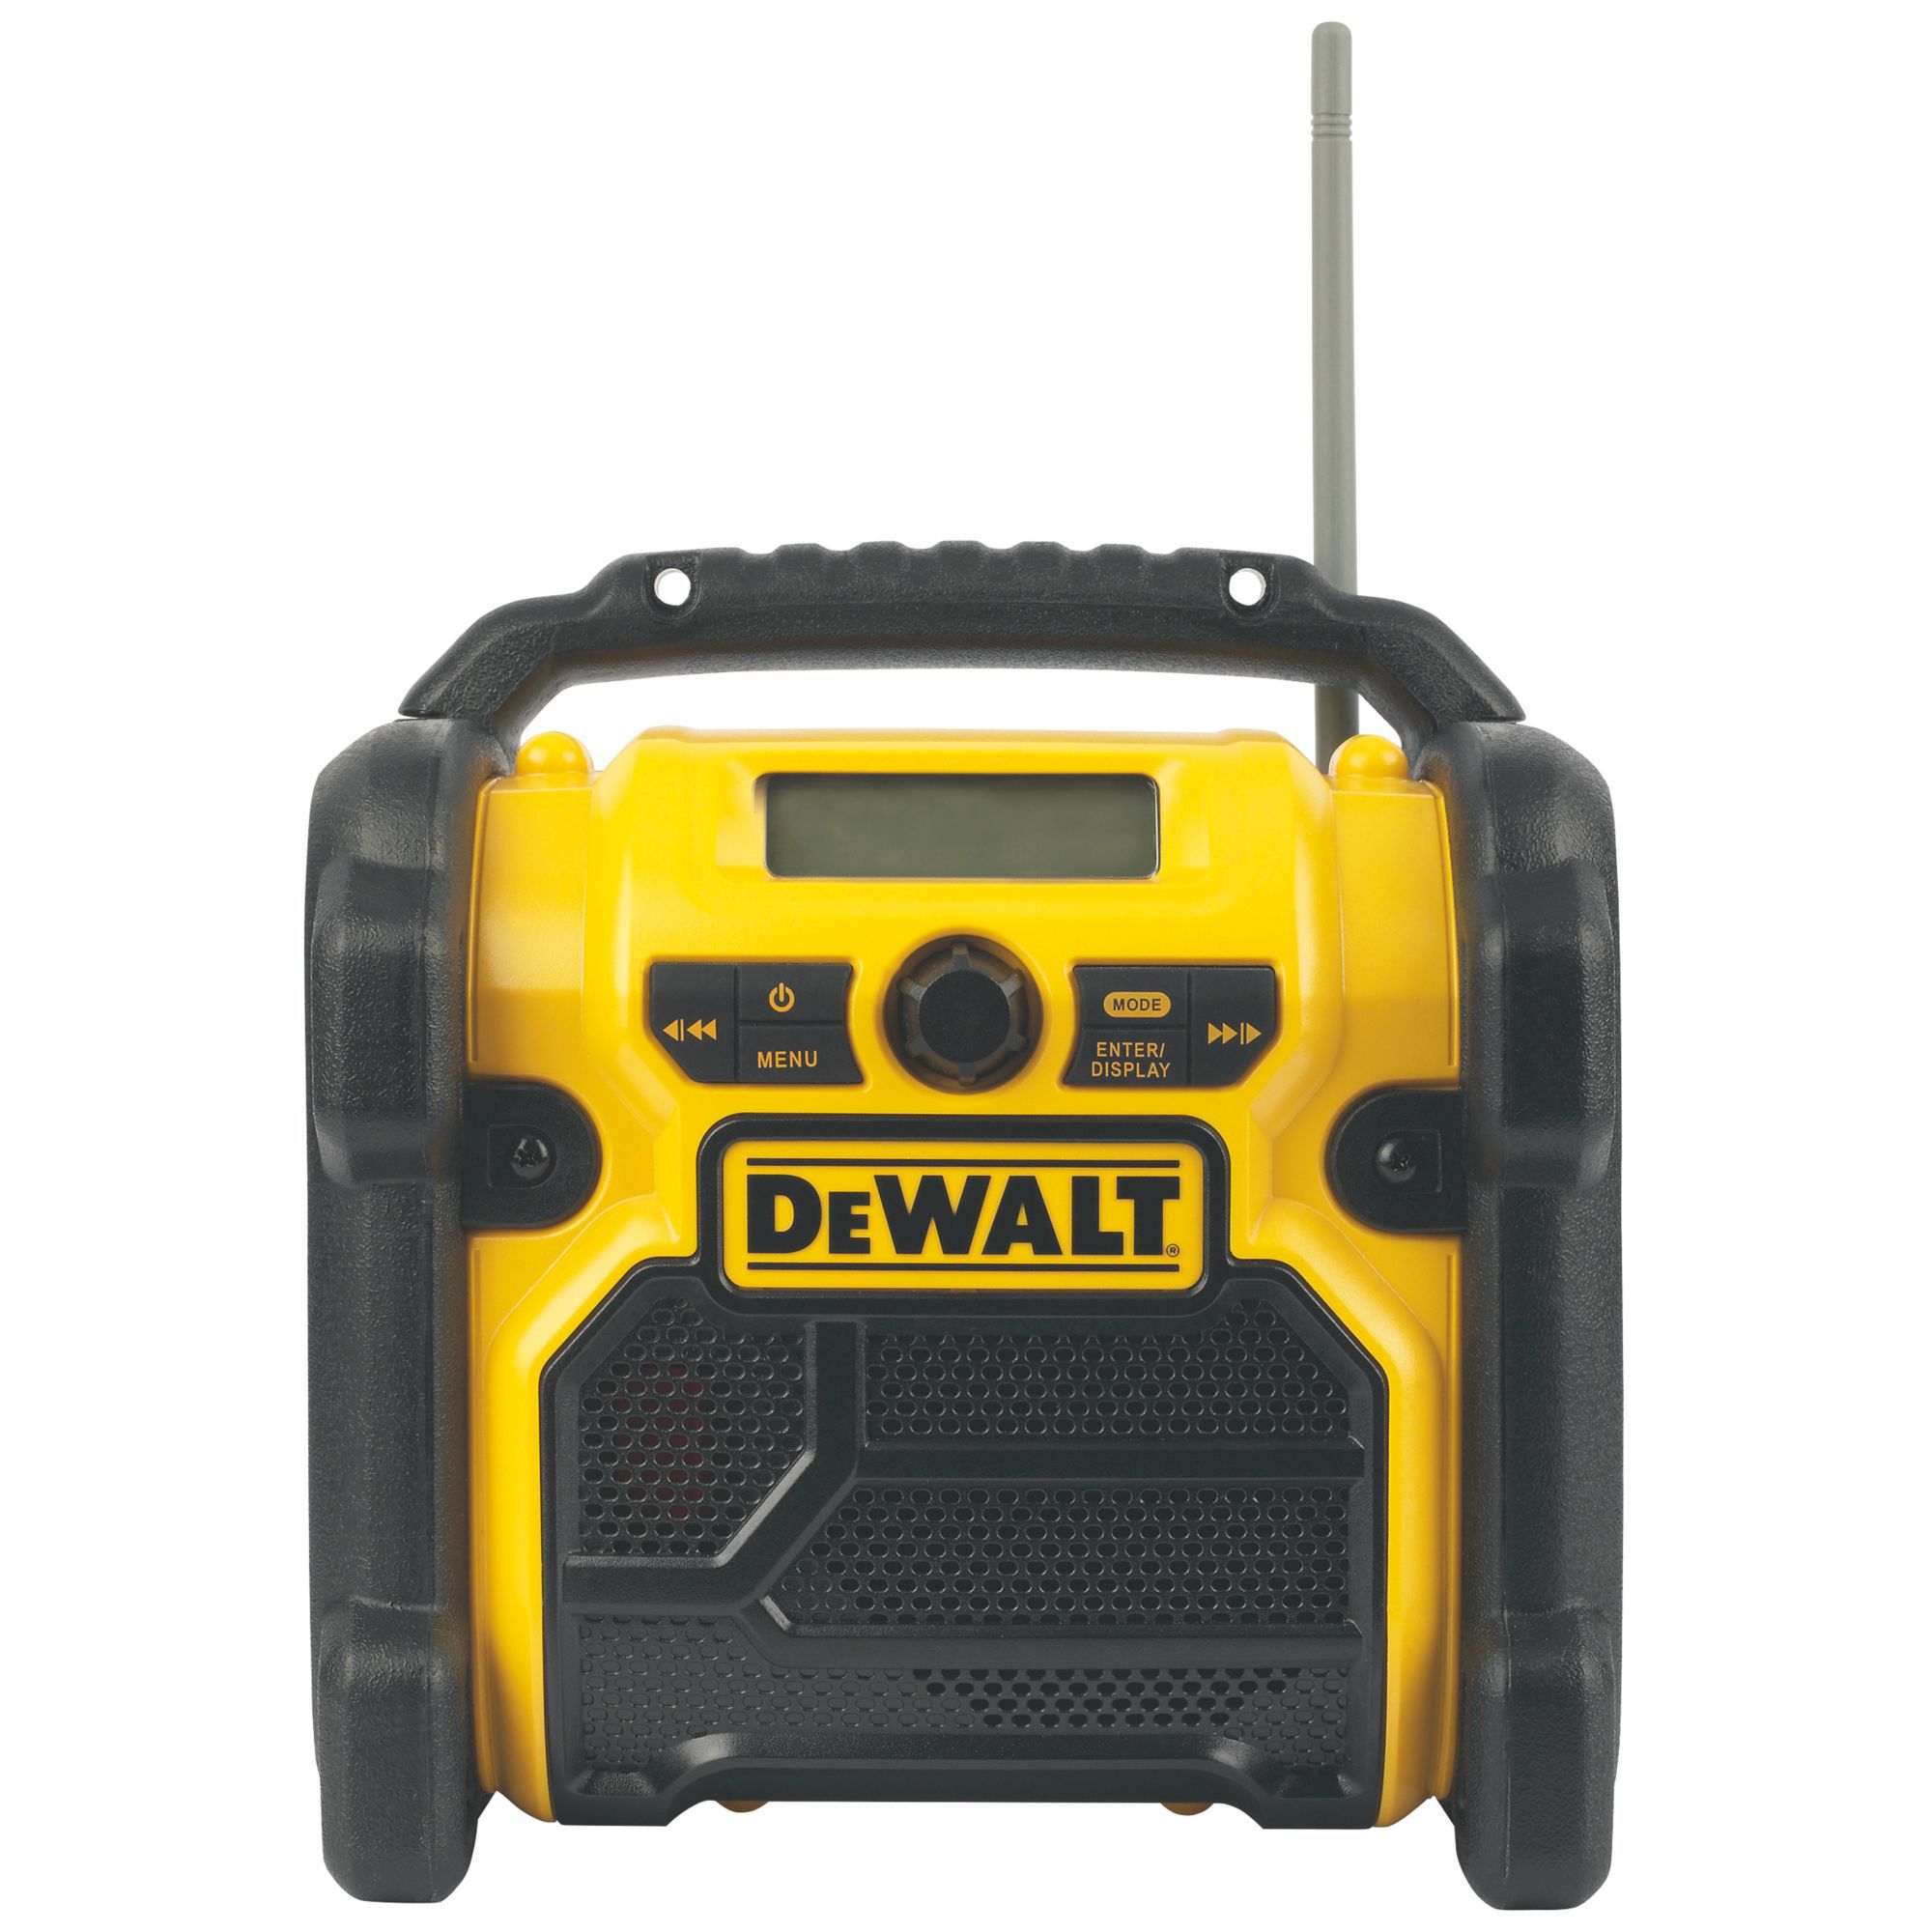 DeWalt 18V DAB Cordless Site radio DCR021-XJ - Bare unit